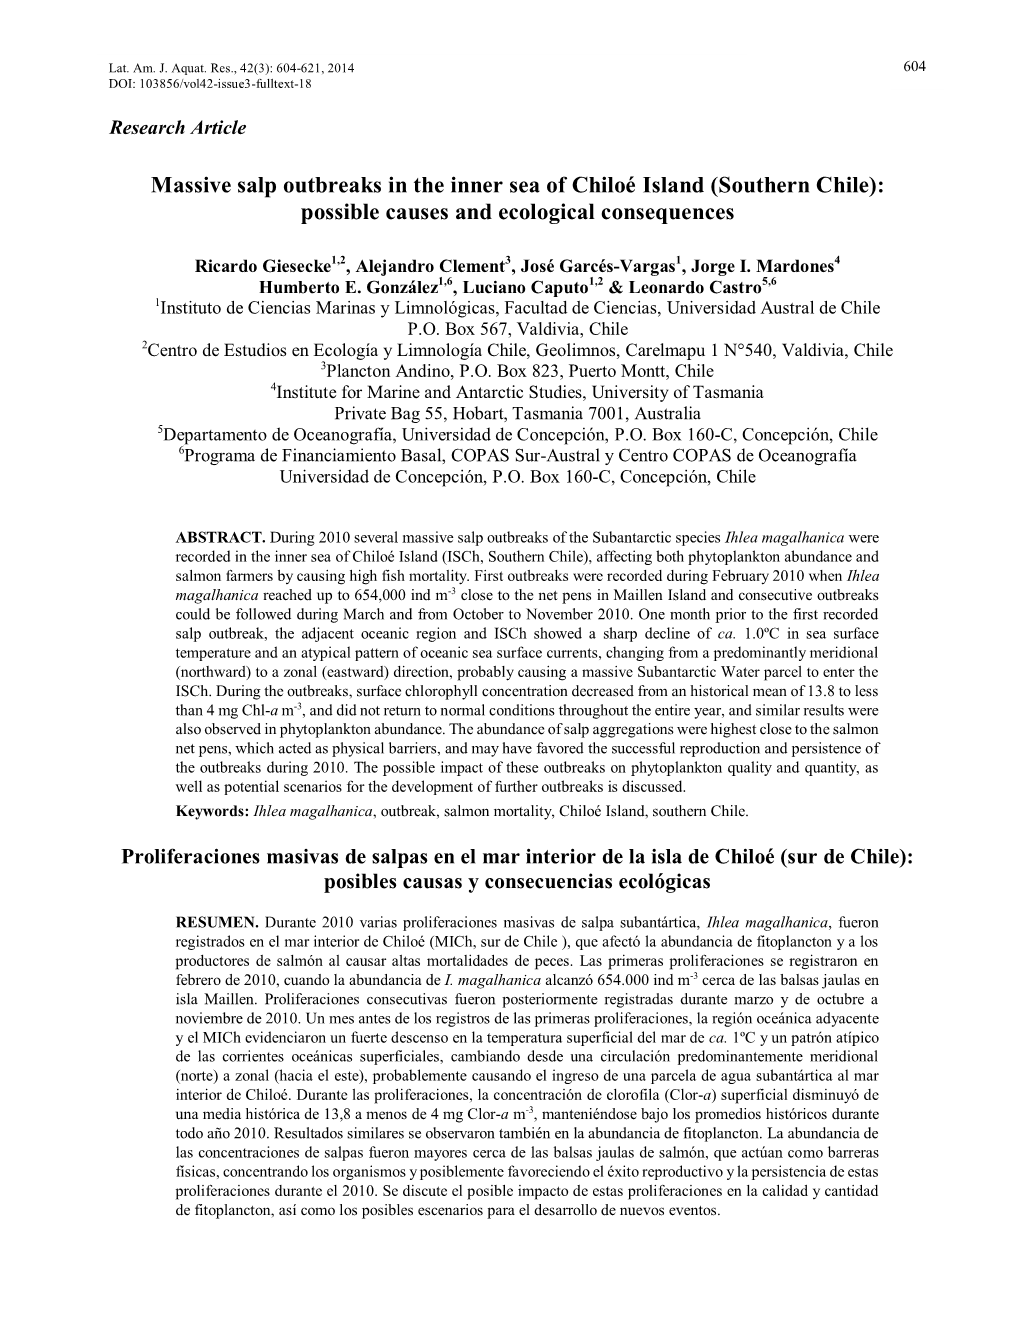 Massive Salp Outbreaks in the Inner Sea of Chiloé Island 604 1 DOI: 103856/Vol42-Issue3-Fulltext-18